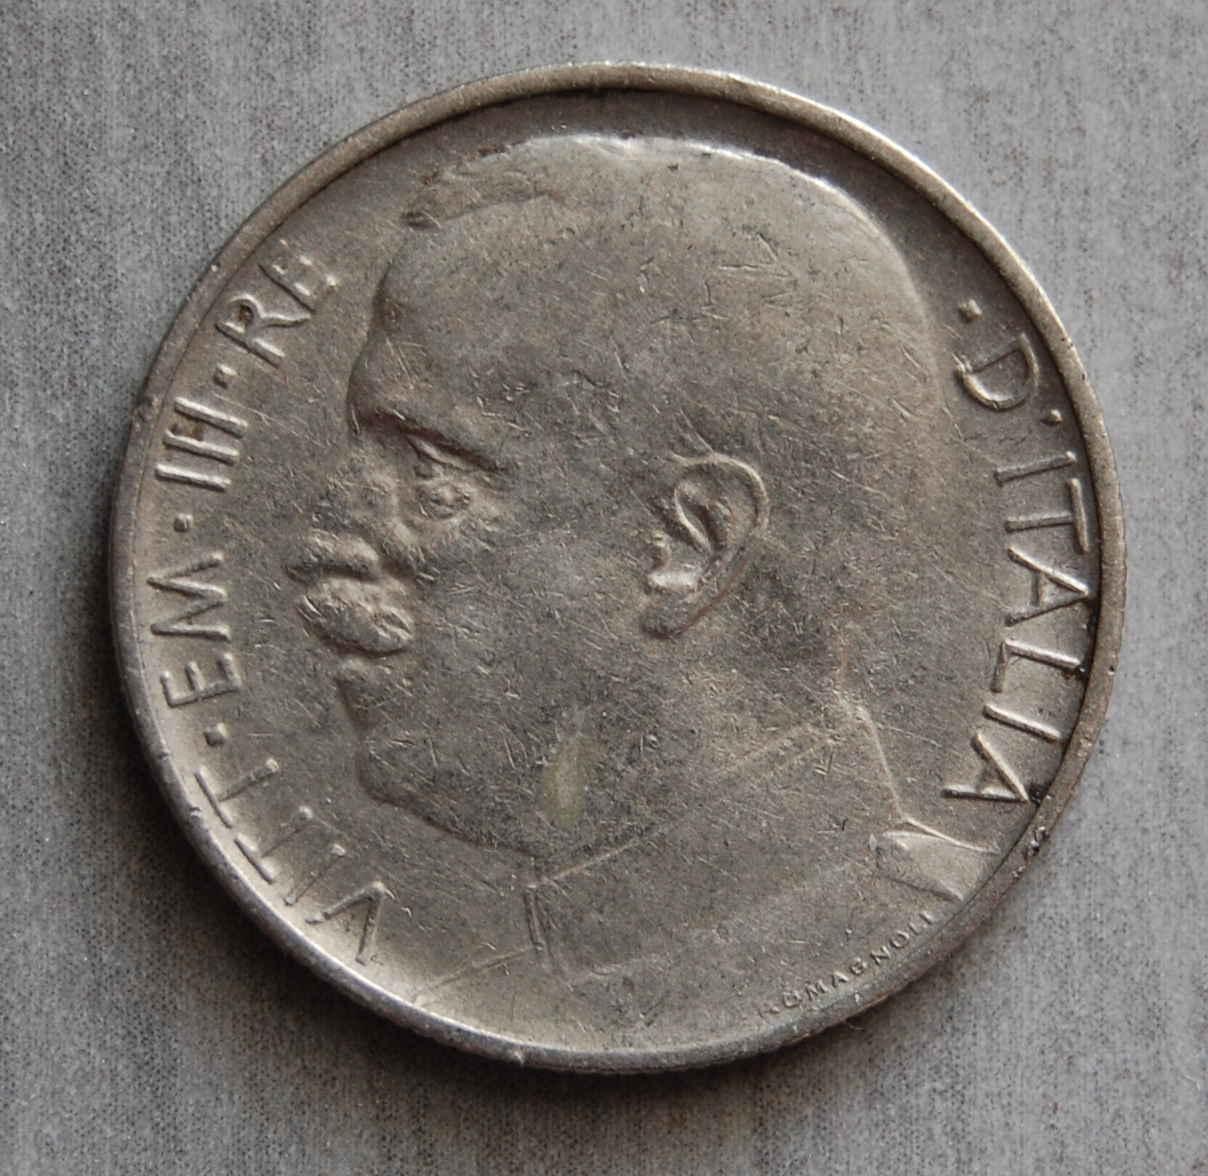  Italien 50 Centesimo 1920  KM-Nr. 61.2 gerändelter Rand!!!!!! selten   